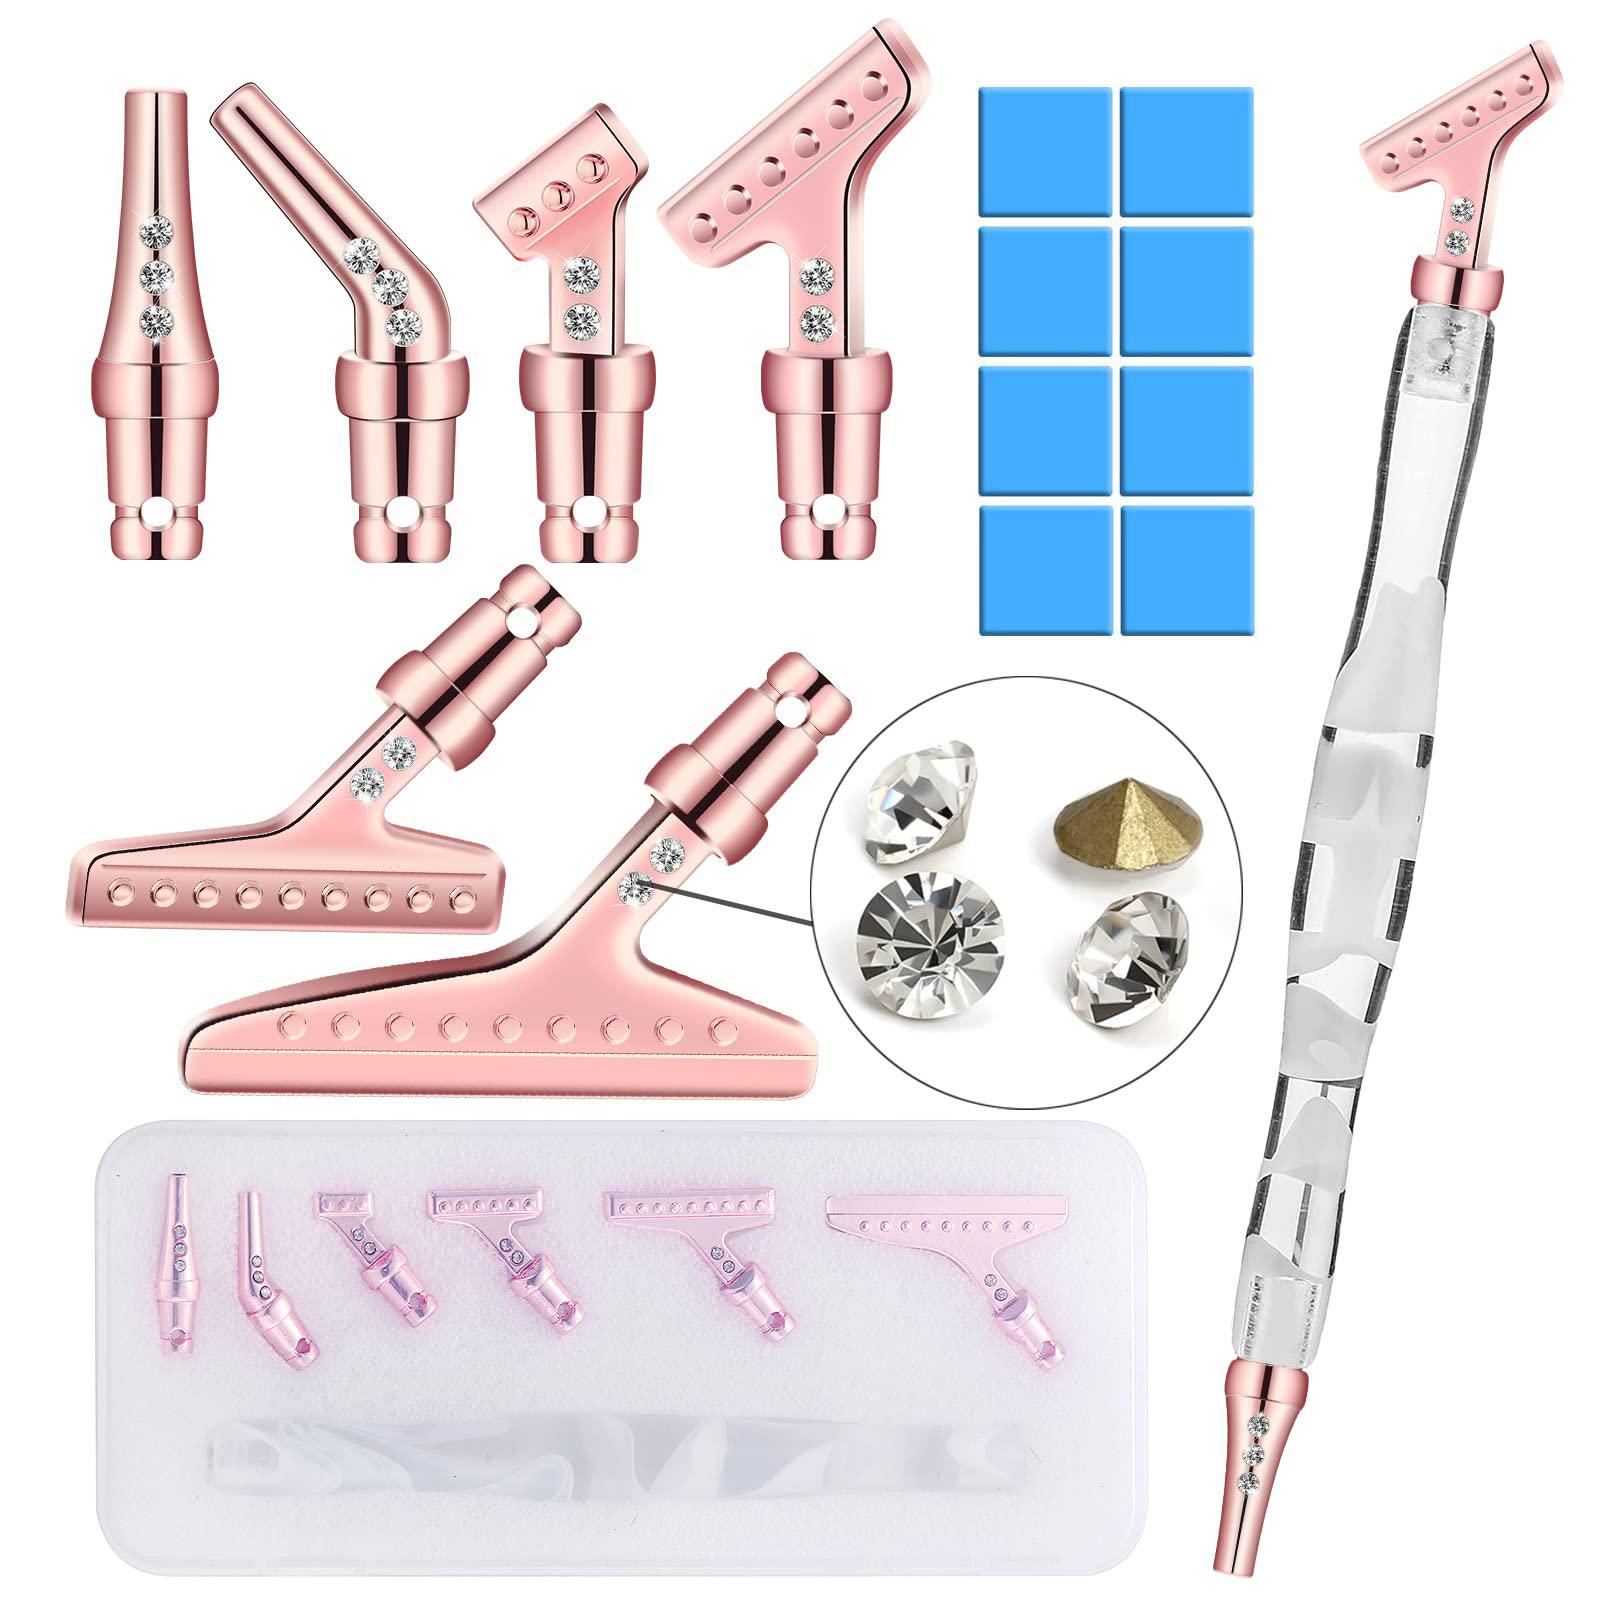 MLGDA 17 pcs diamond painting pen metal pen tips tools kits,includ  ergonomic resin diamond art pen,6 pcs 45 replacement metal tip,8